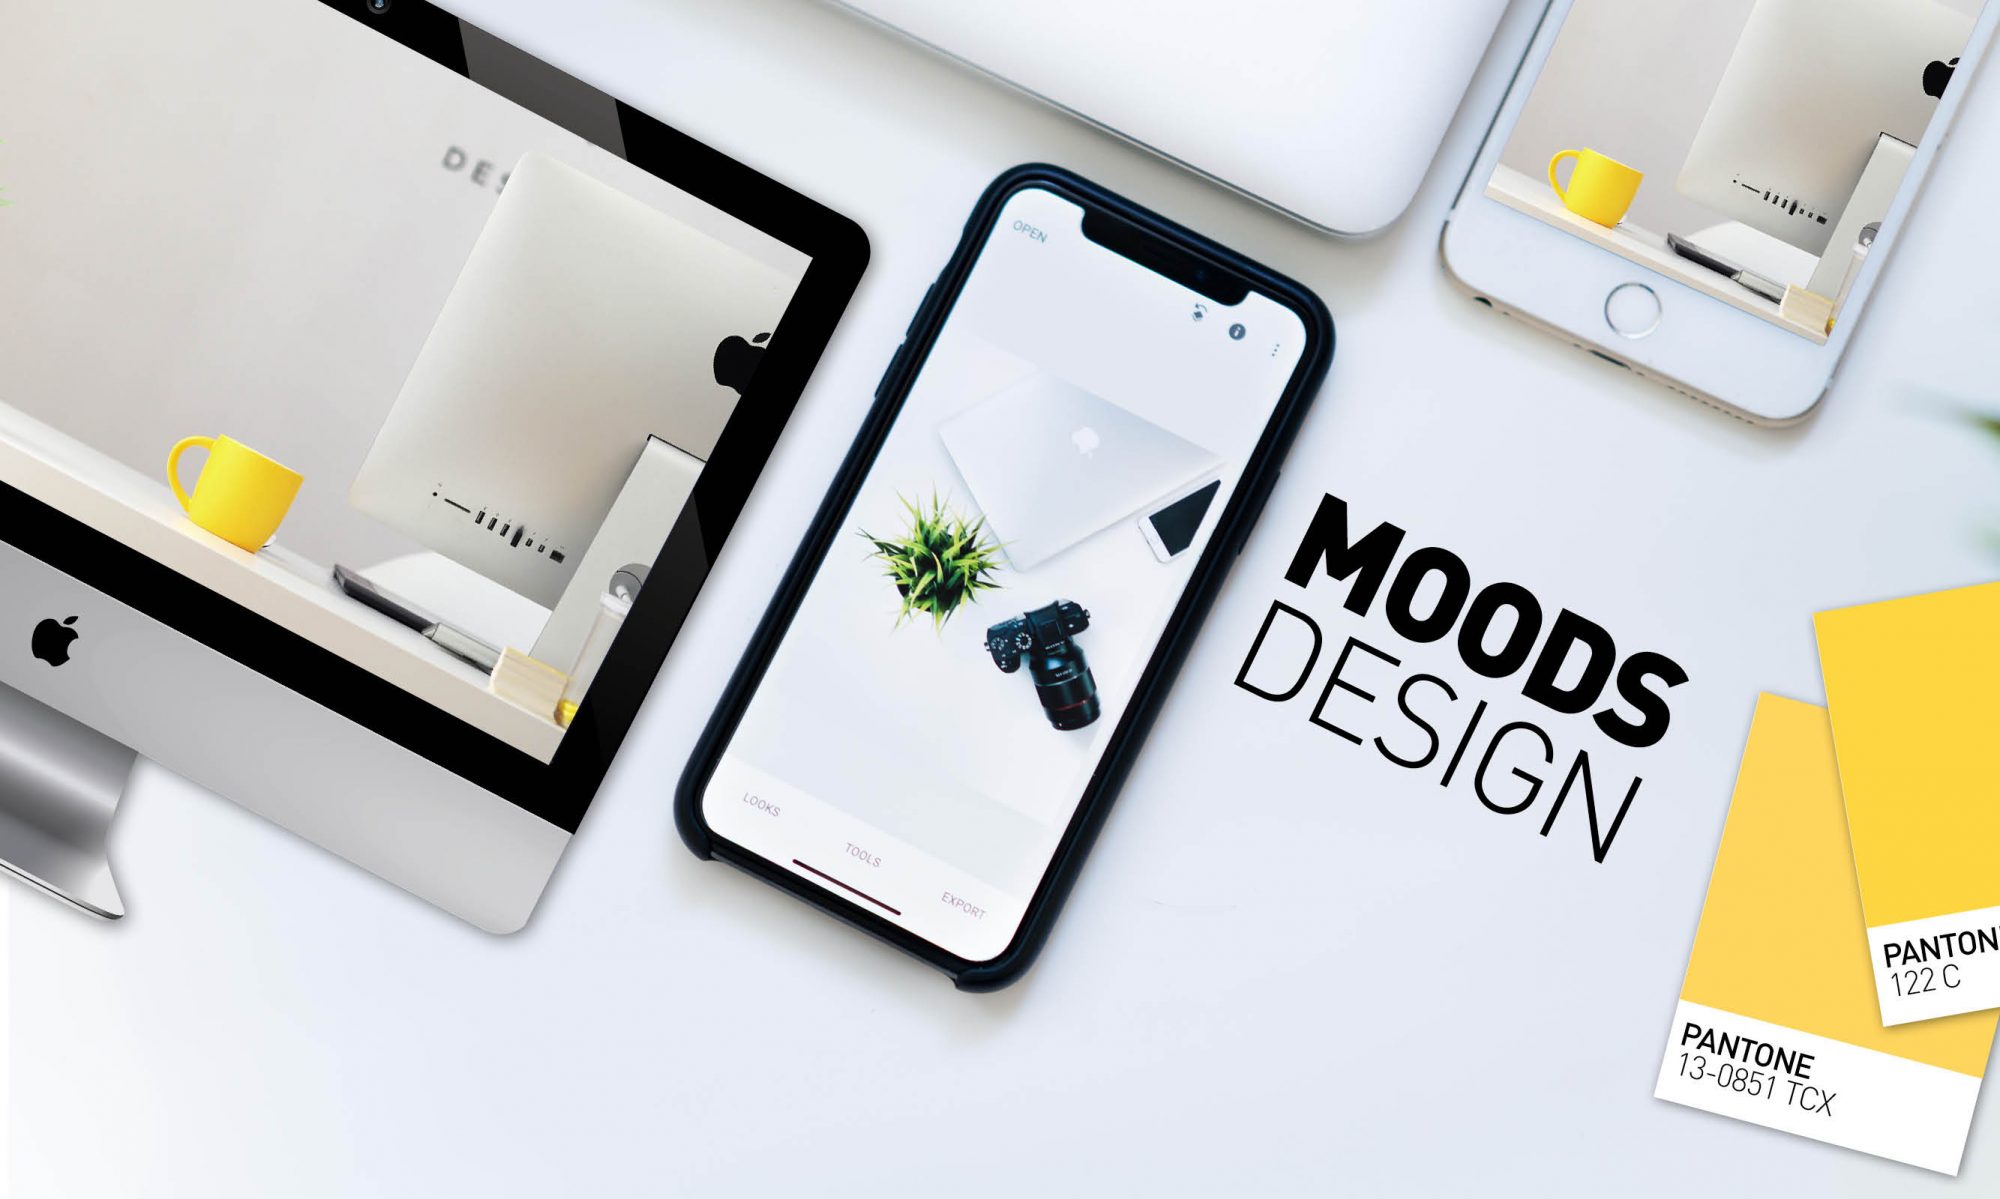 Moods Design